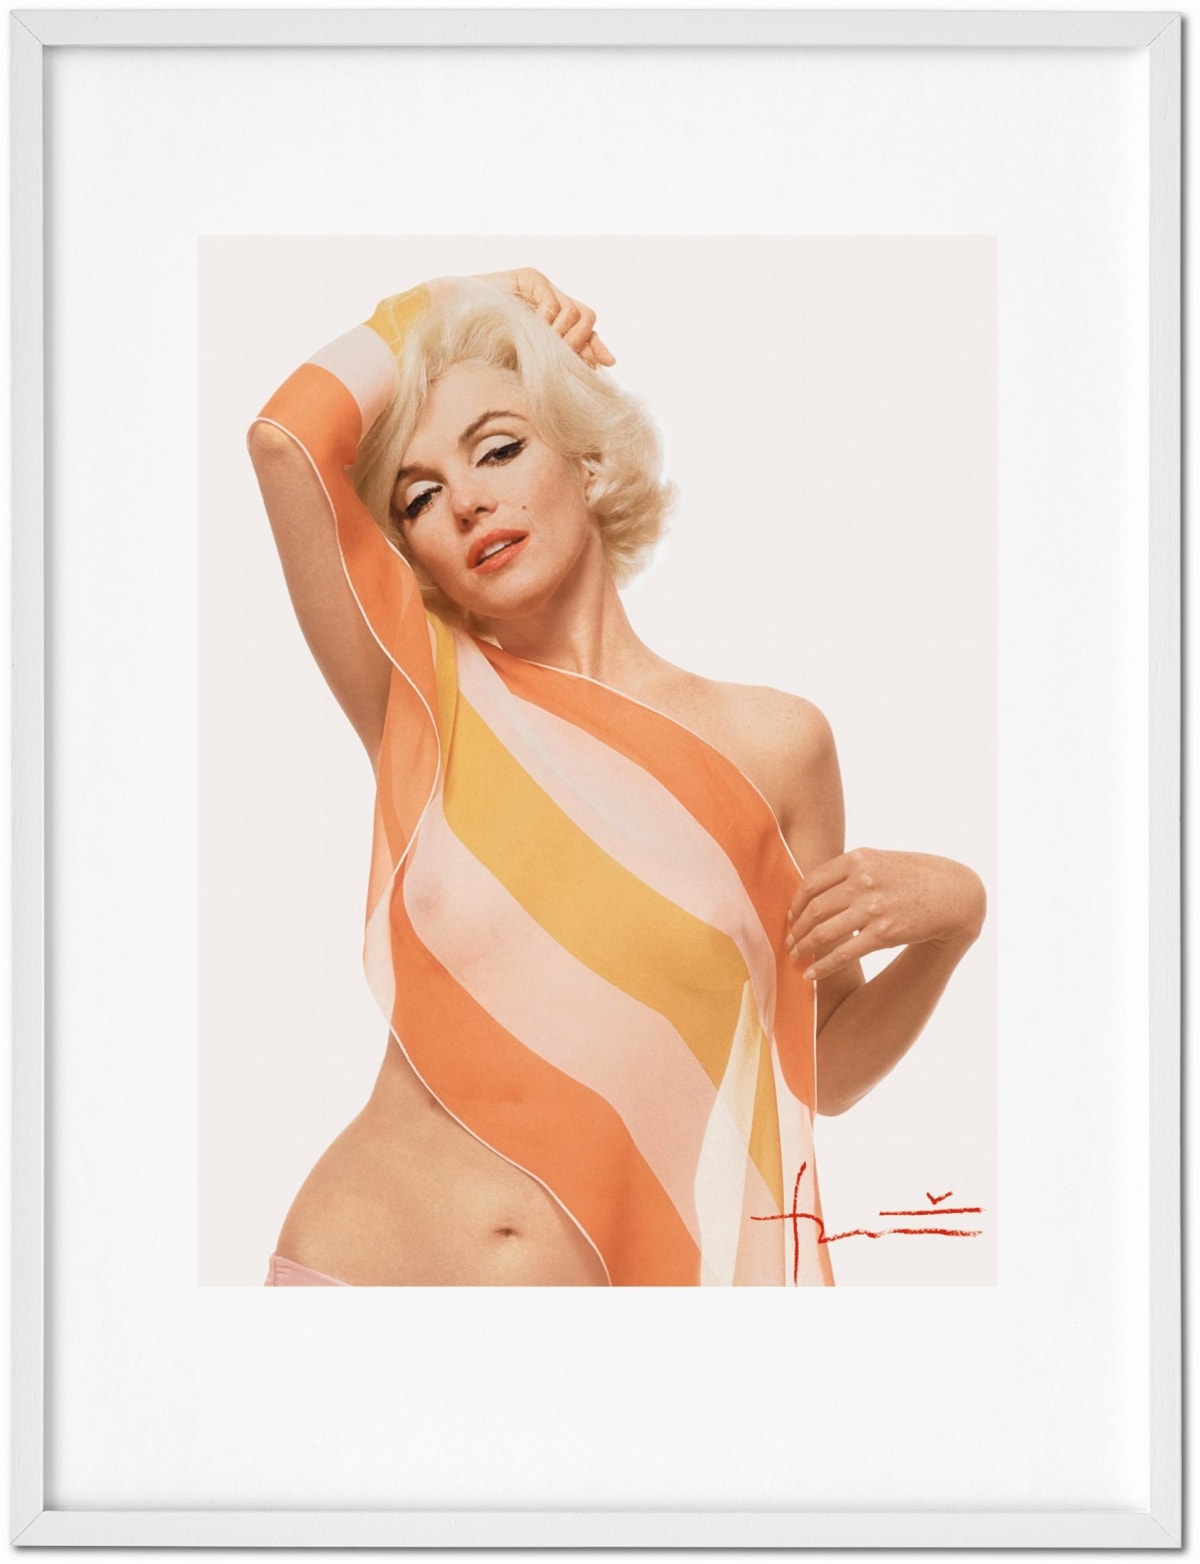 Norman Mailer/Bert Stern. Marilyn Monroe, Art Edition No. 1–125 ‘Scarf’